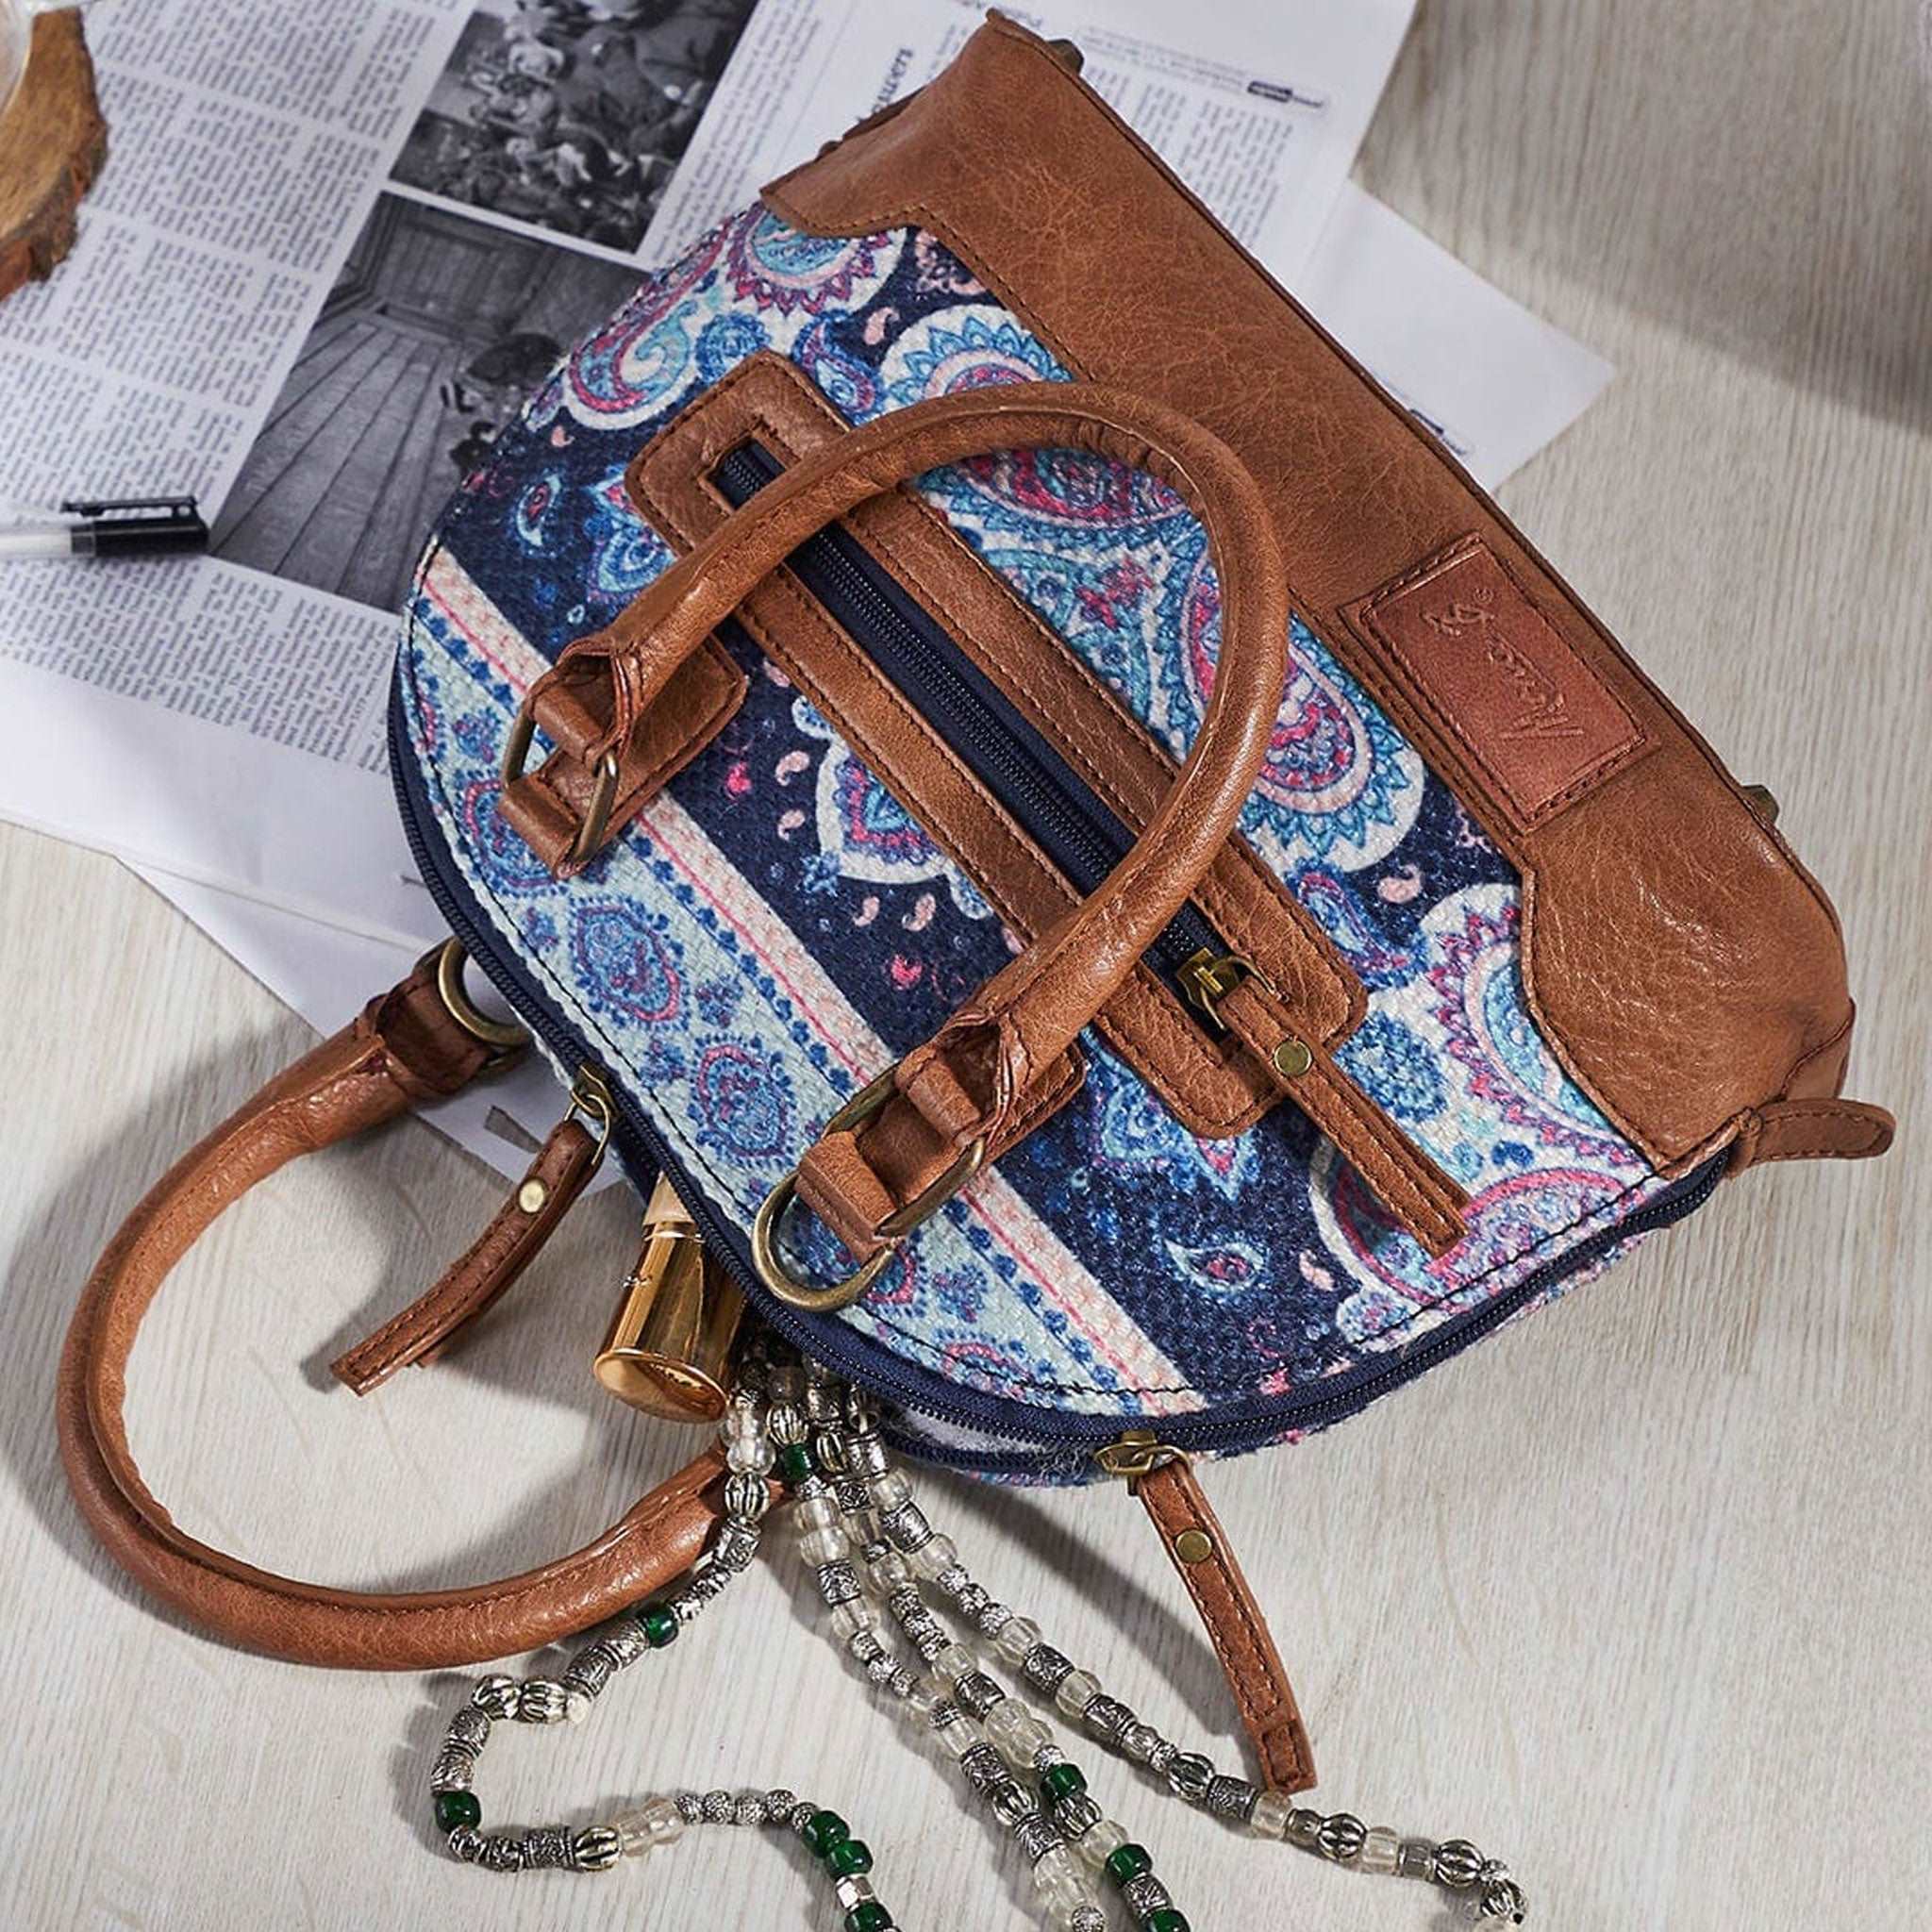 Mona B Canvas Samll Vintage Handbag, Shoulder Bags For Shopping Travel With Stylish Design For Women (Multicolor, Kilim) - M-7008 - Handbag by Mona-B - Backpack, Flash Sale, Flat40, Sale, 